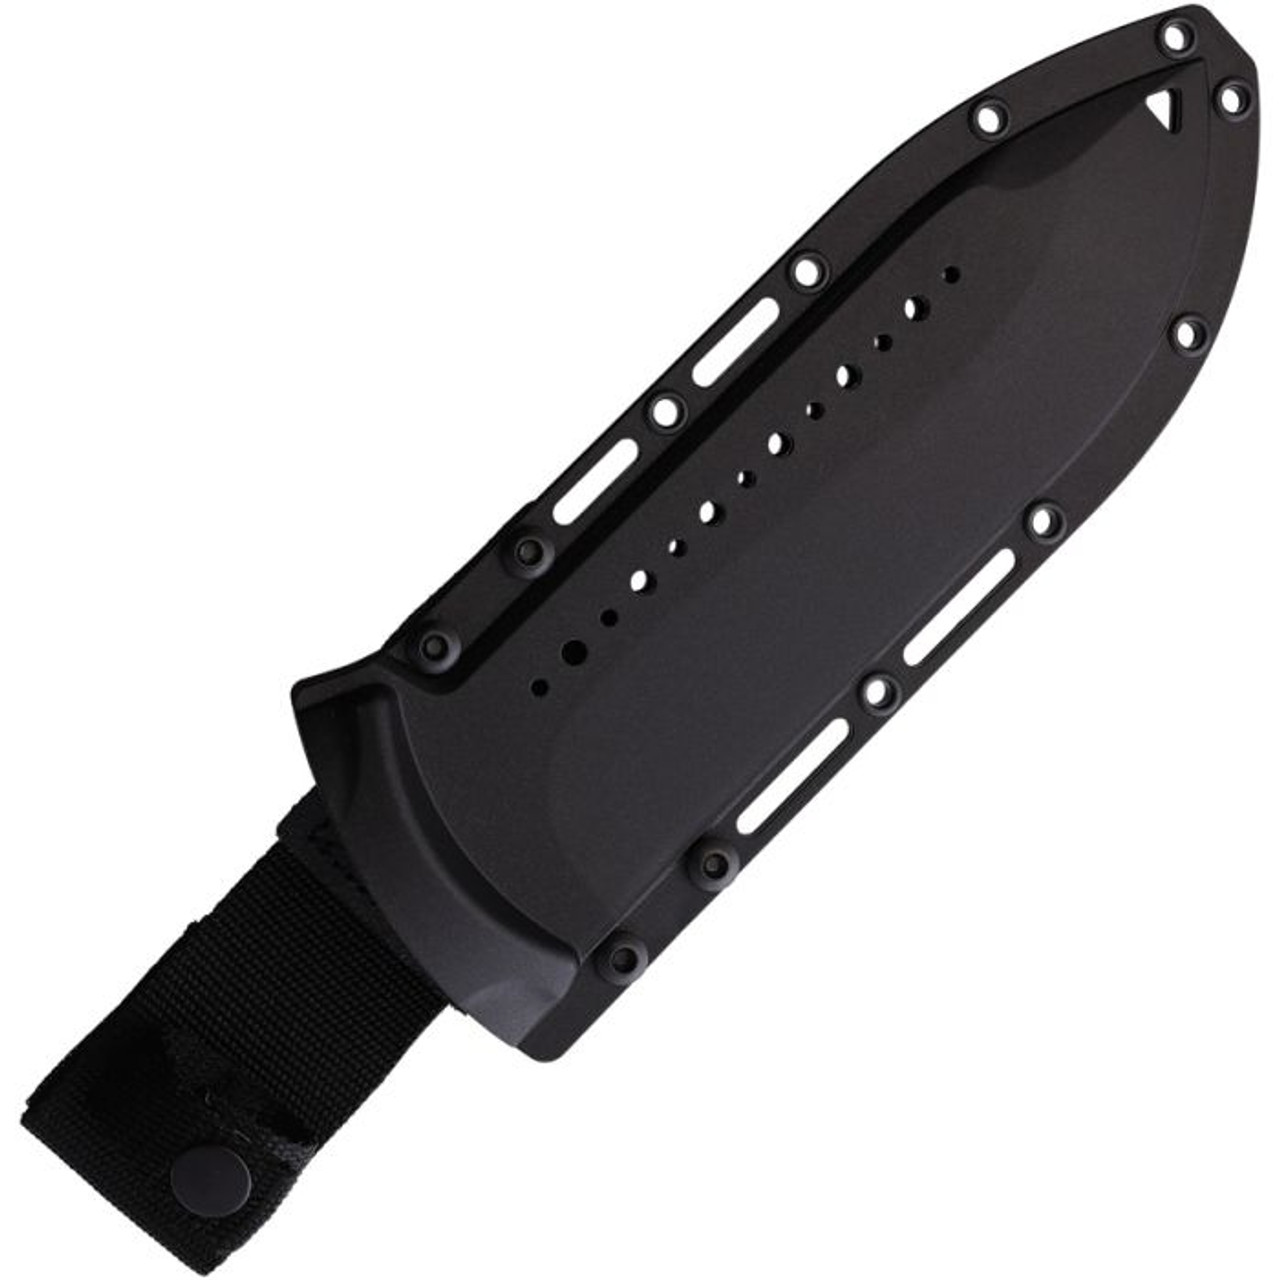 Begg Knives Bolo Fixed Blade Knife (BG022)- 8" Black and Satin AUS-10A Sawback Bolo Blade, Black Injection Molded Nylon Handle